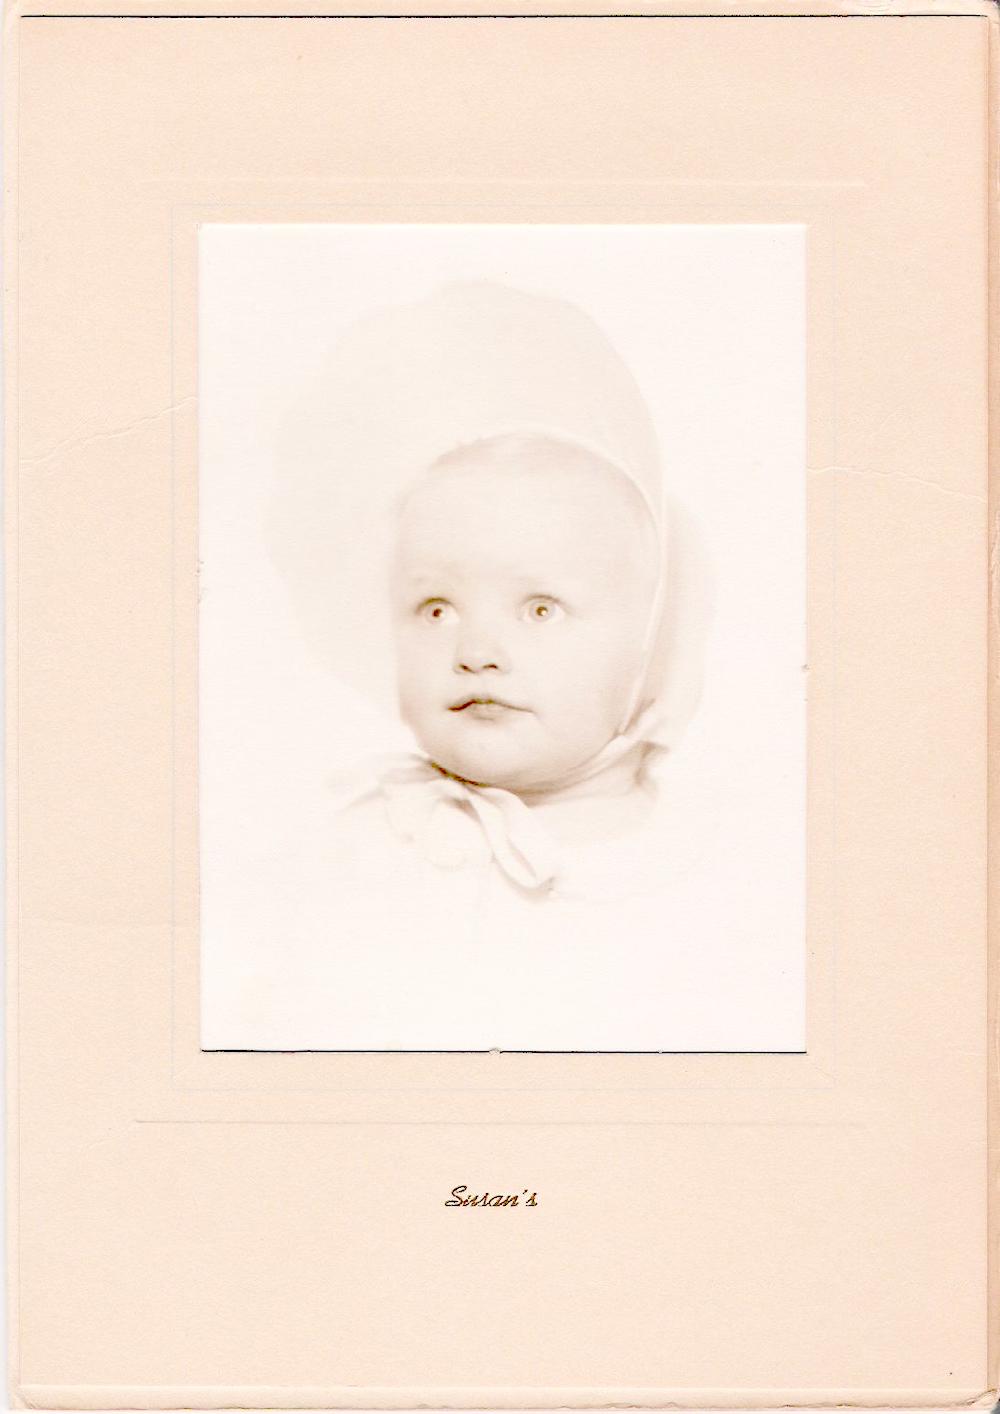 Susan as an infant in bonnet. Photo courtesy of Susan Griffin.